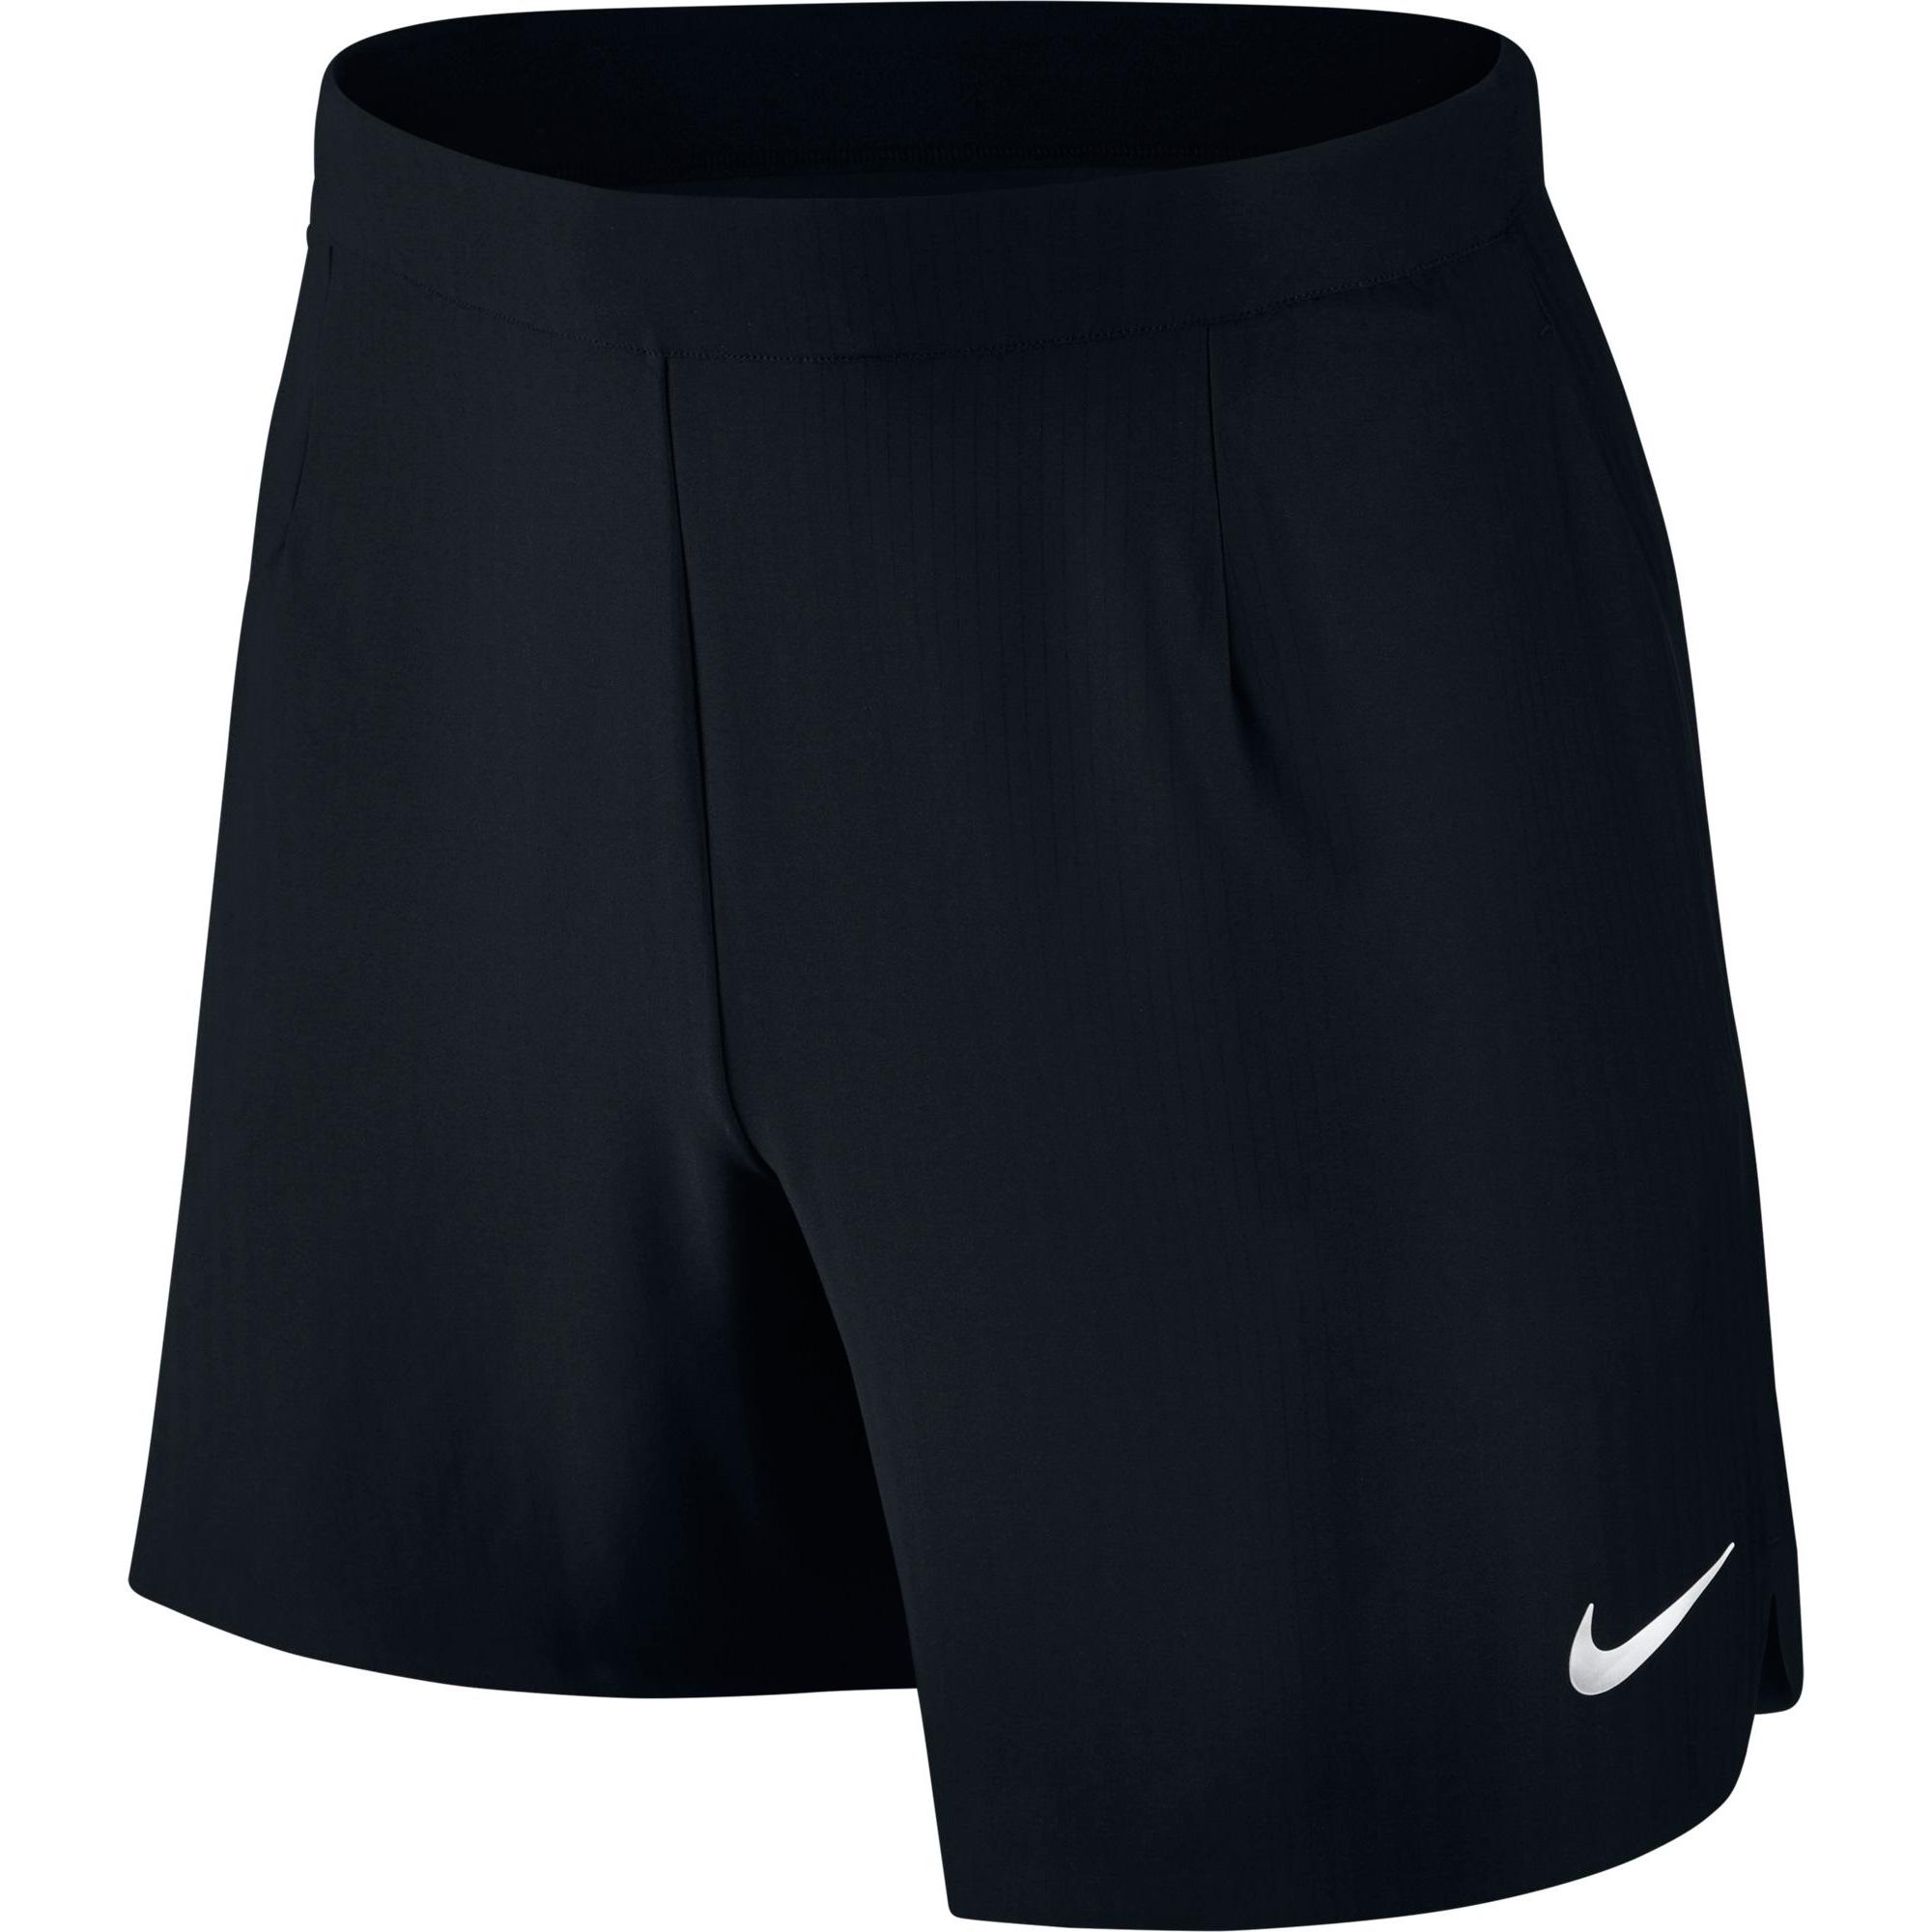 Nike Mens Flex 7 Inch Tennis Shorts - Black - Tennisnuts.com